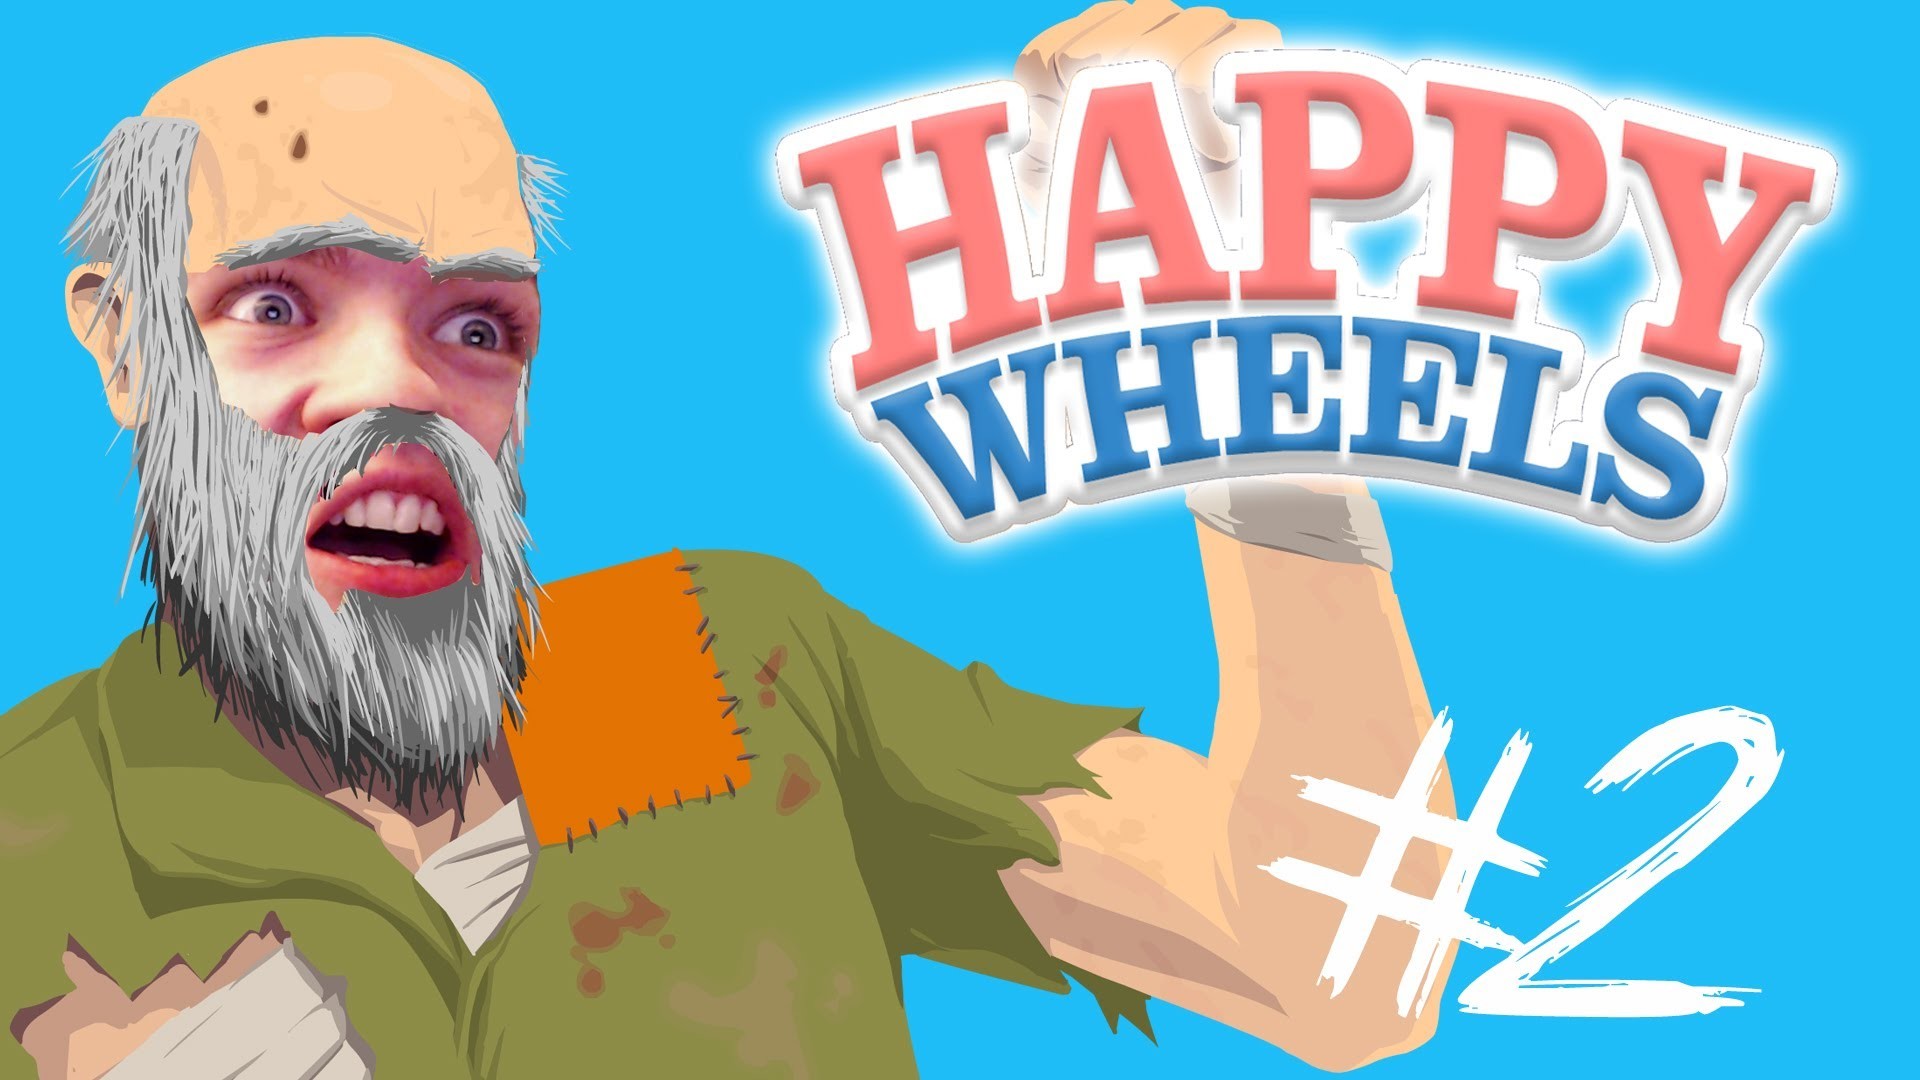 happy wheels apk free download full version